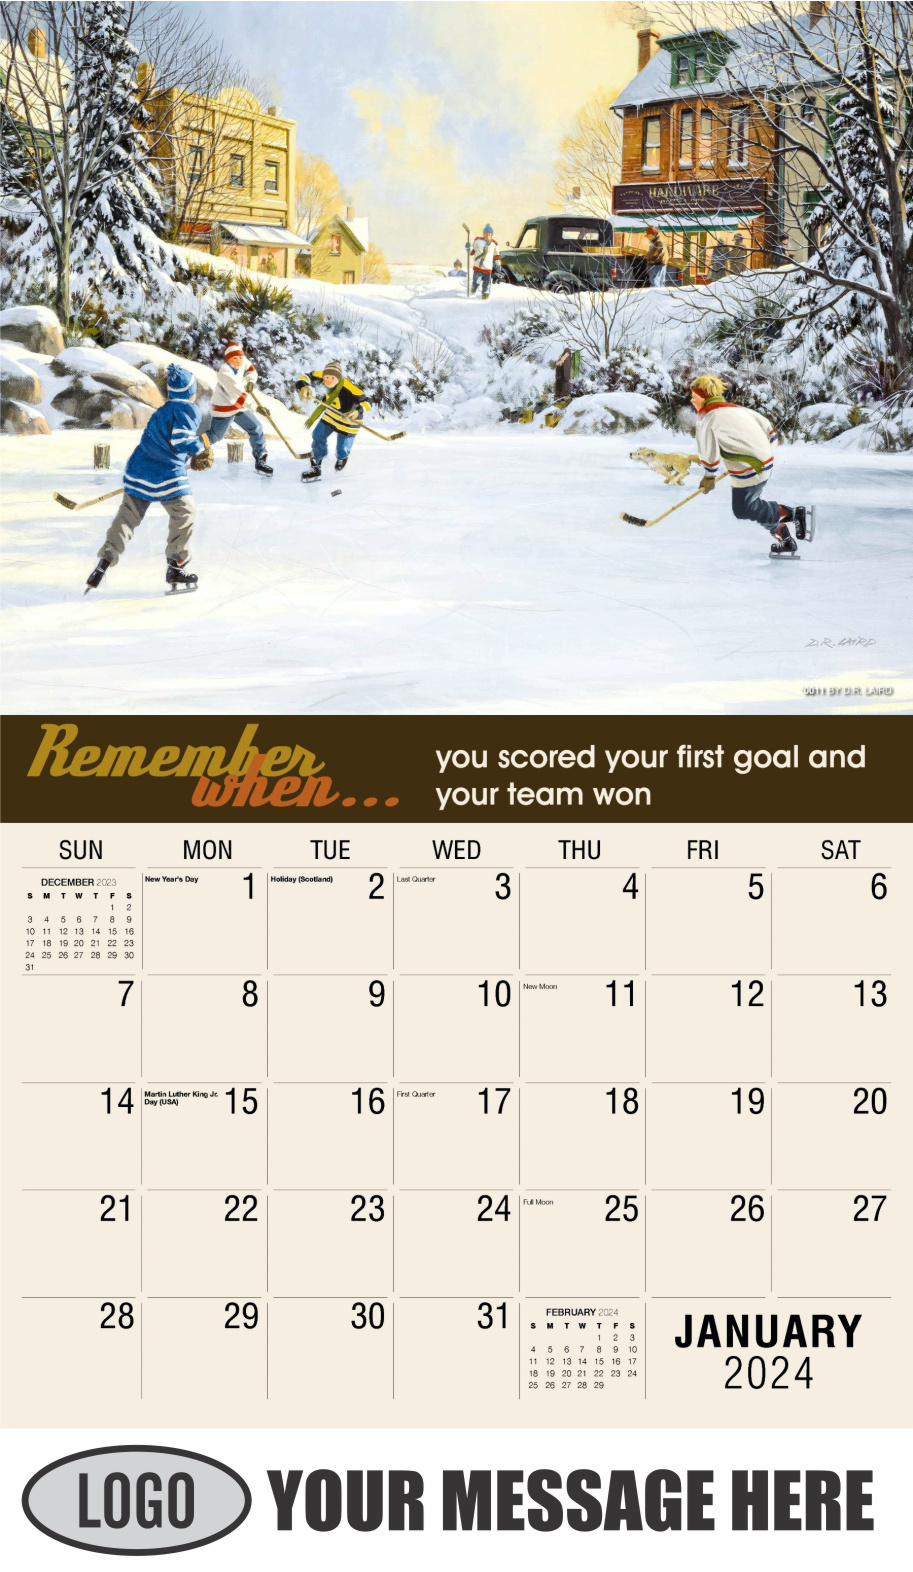 Remember When 2024 Business Advertising Calendar - January